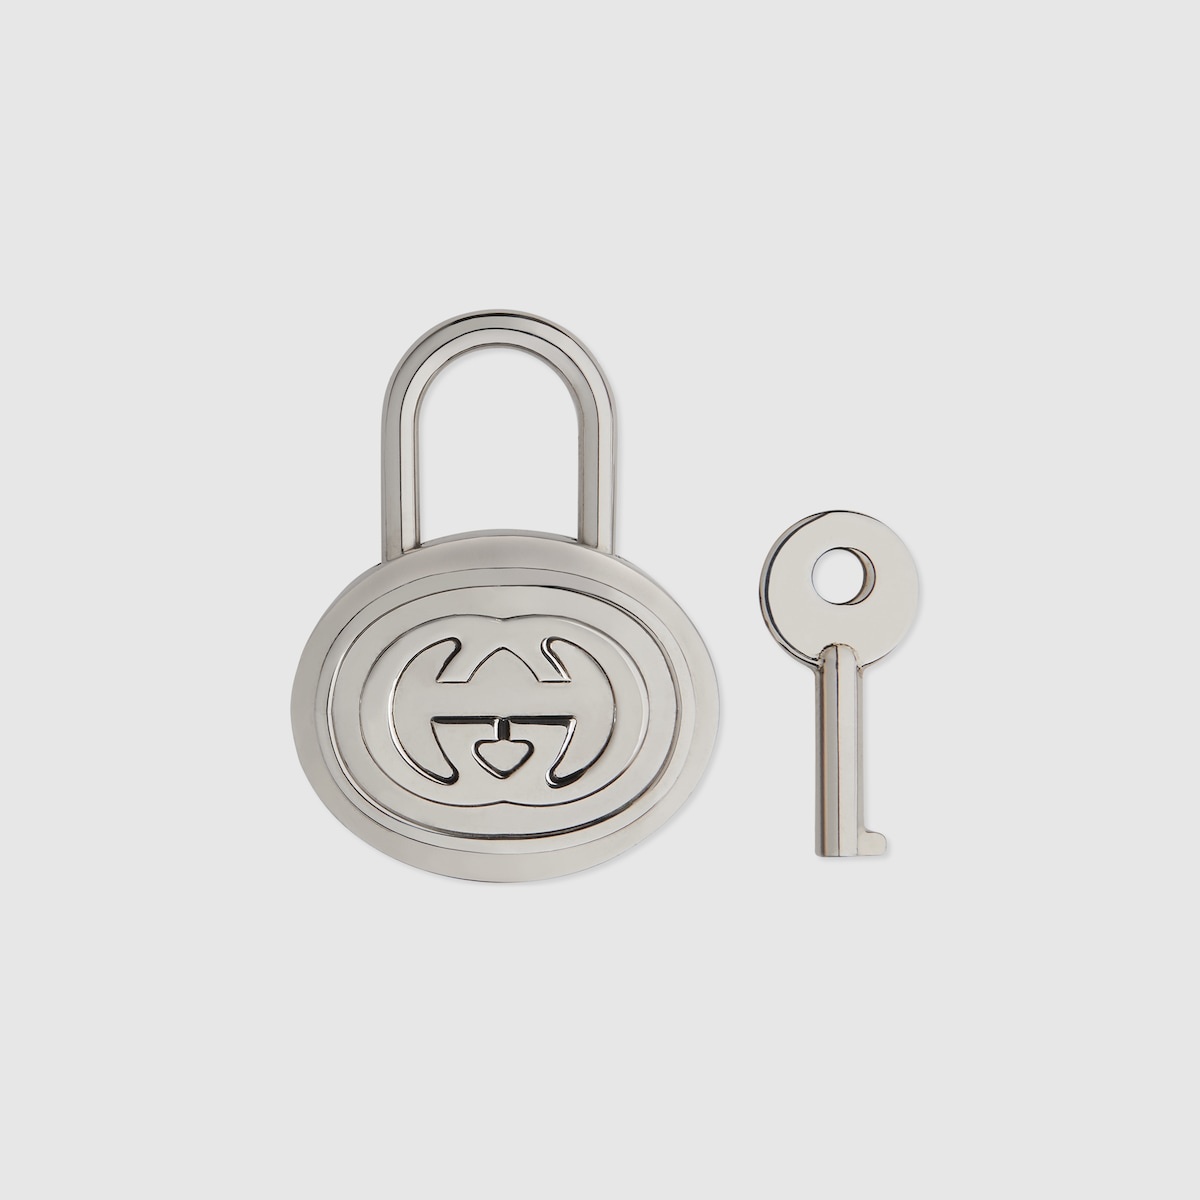 Interlocking G padlock - 1